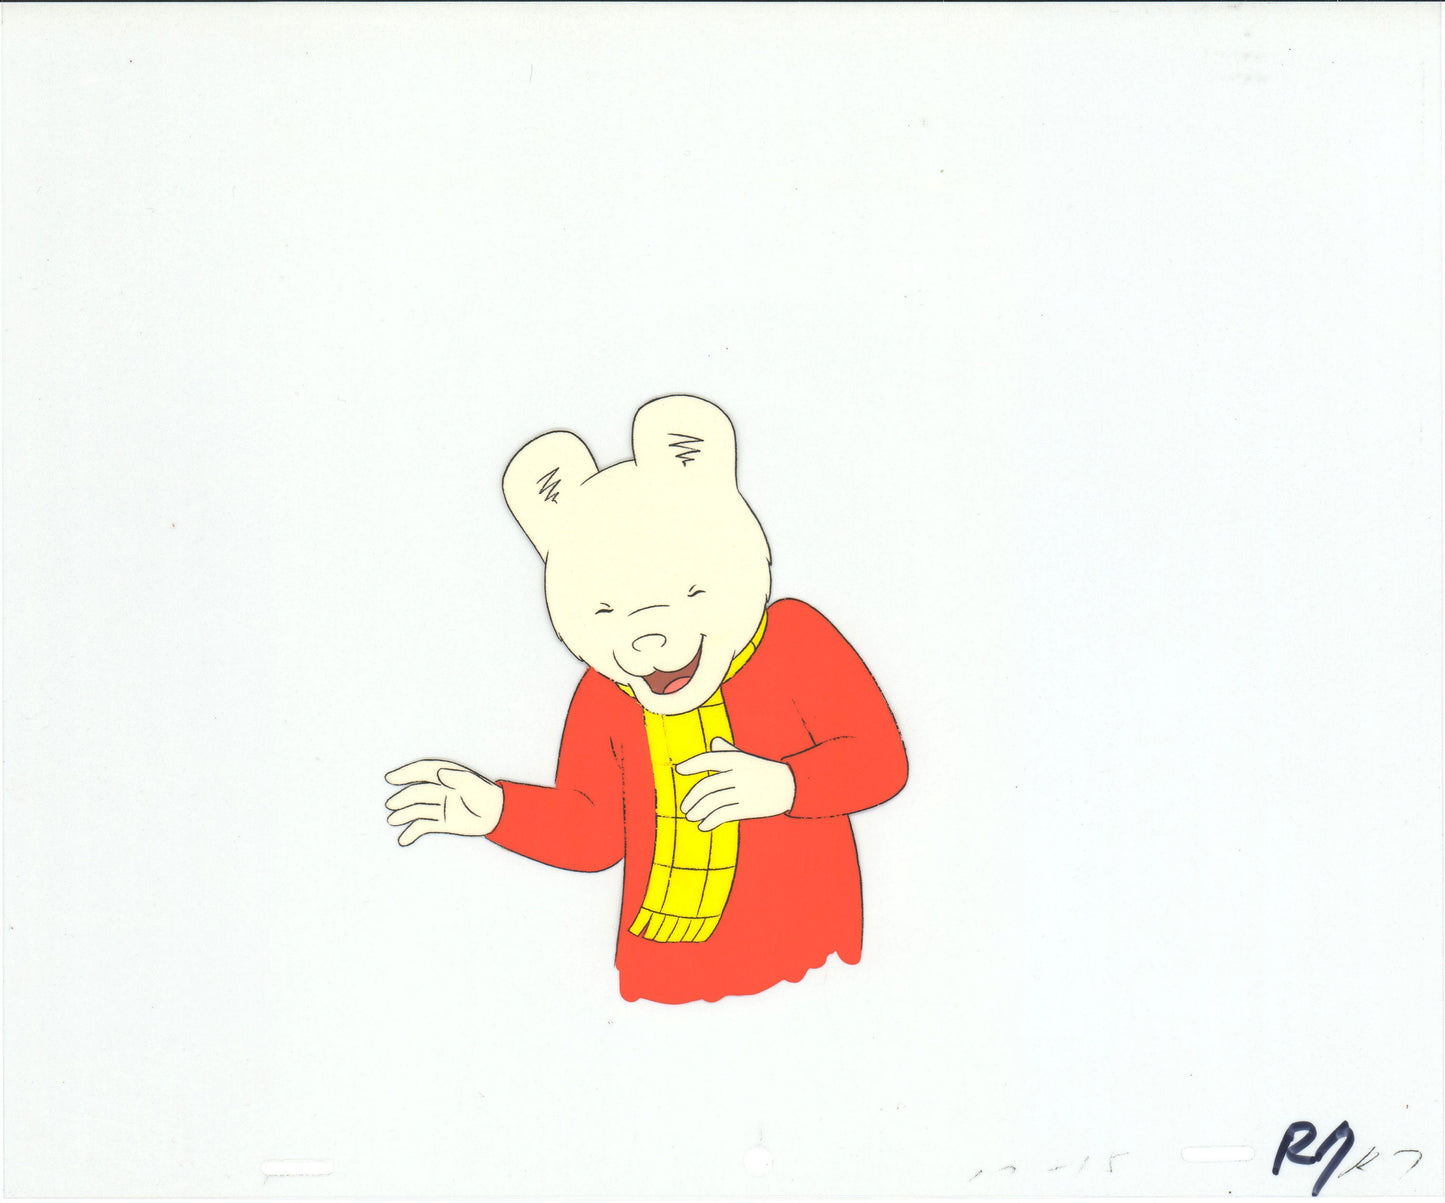 RUPERT Bear Original Production Animation Cel from the Cartoon by Nelvana Tourtel Animation 1990s B70183